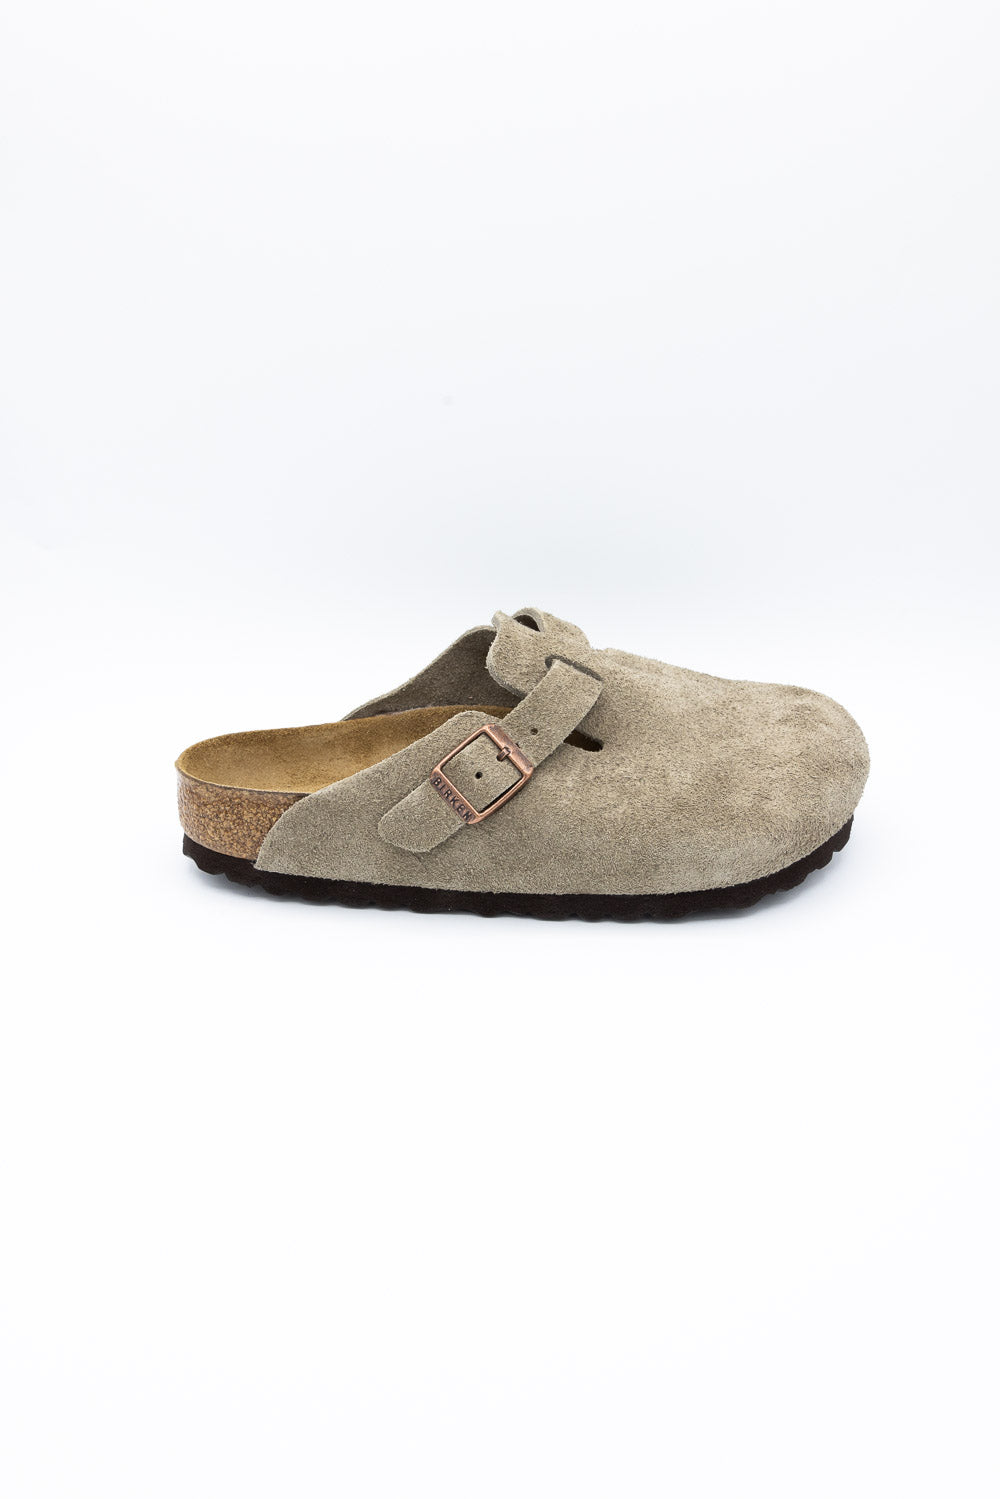 Birkenstock Arizona Soft Footbed - Taupe Suede Size 39